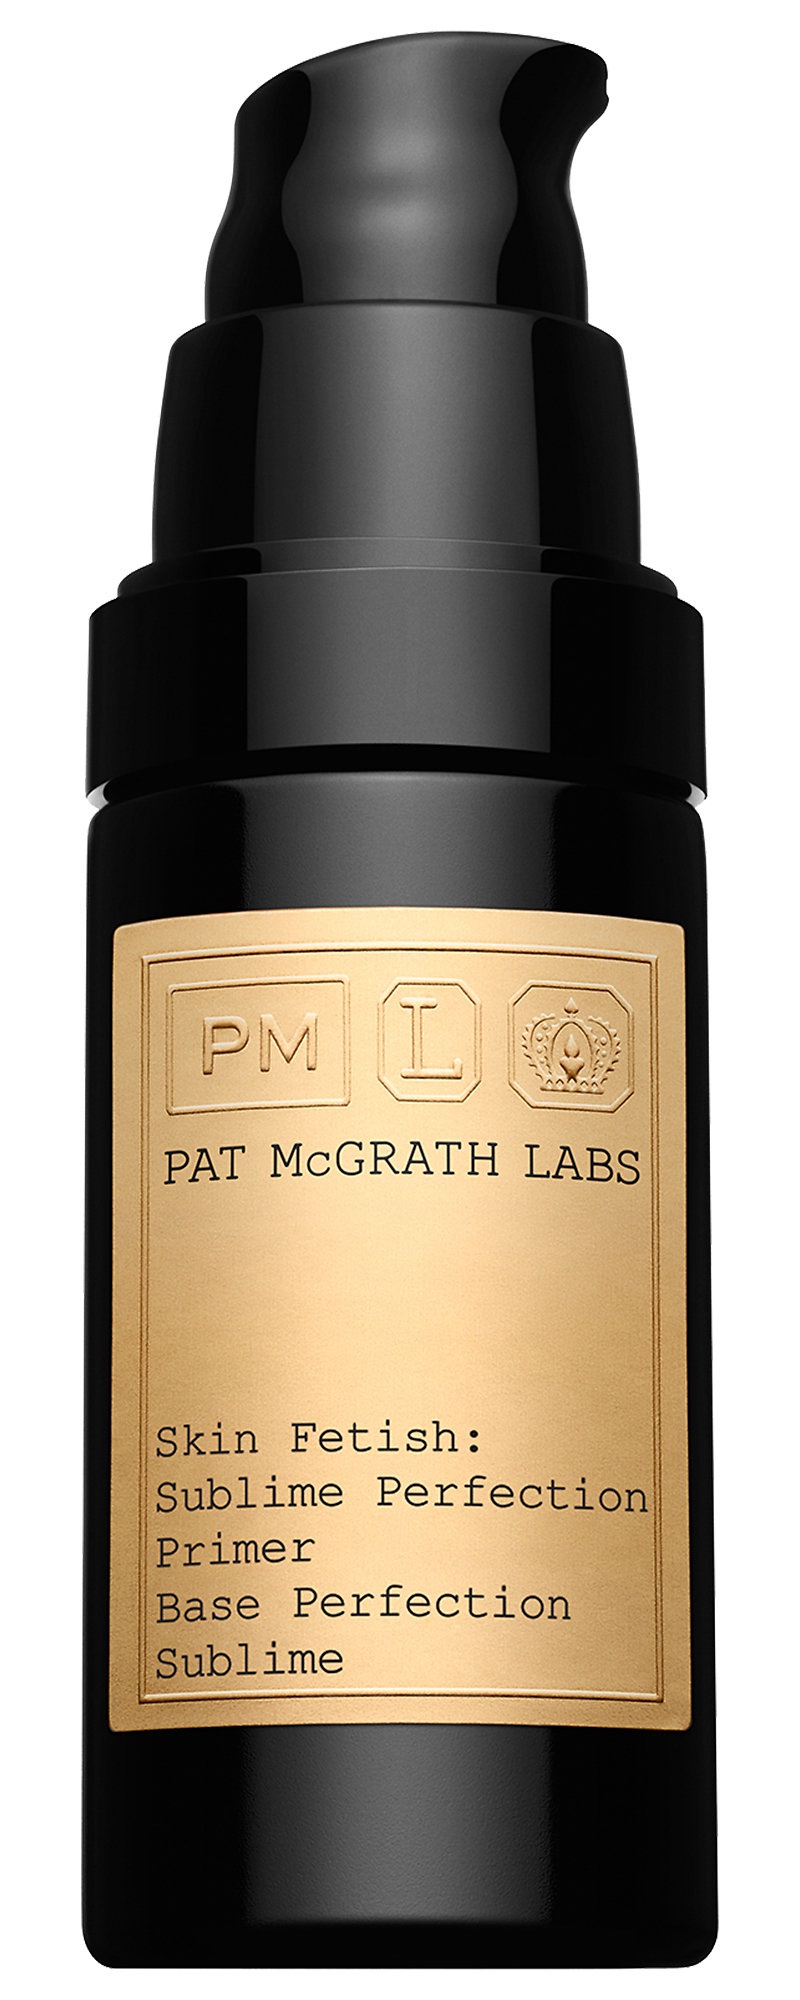 Pat McGrath Labs Skin Fetish: Sublime Perfection Primer